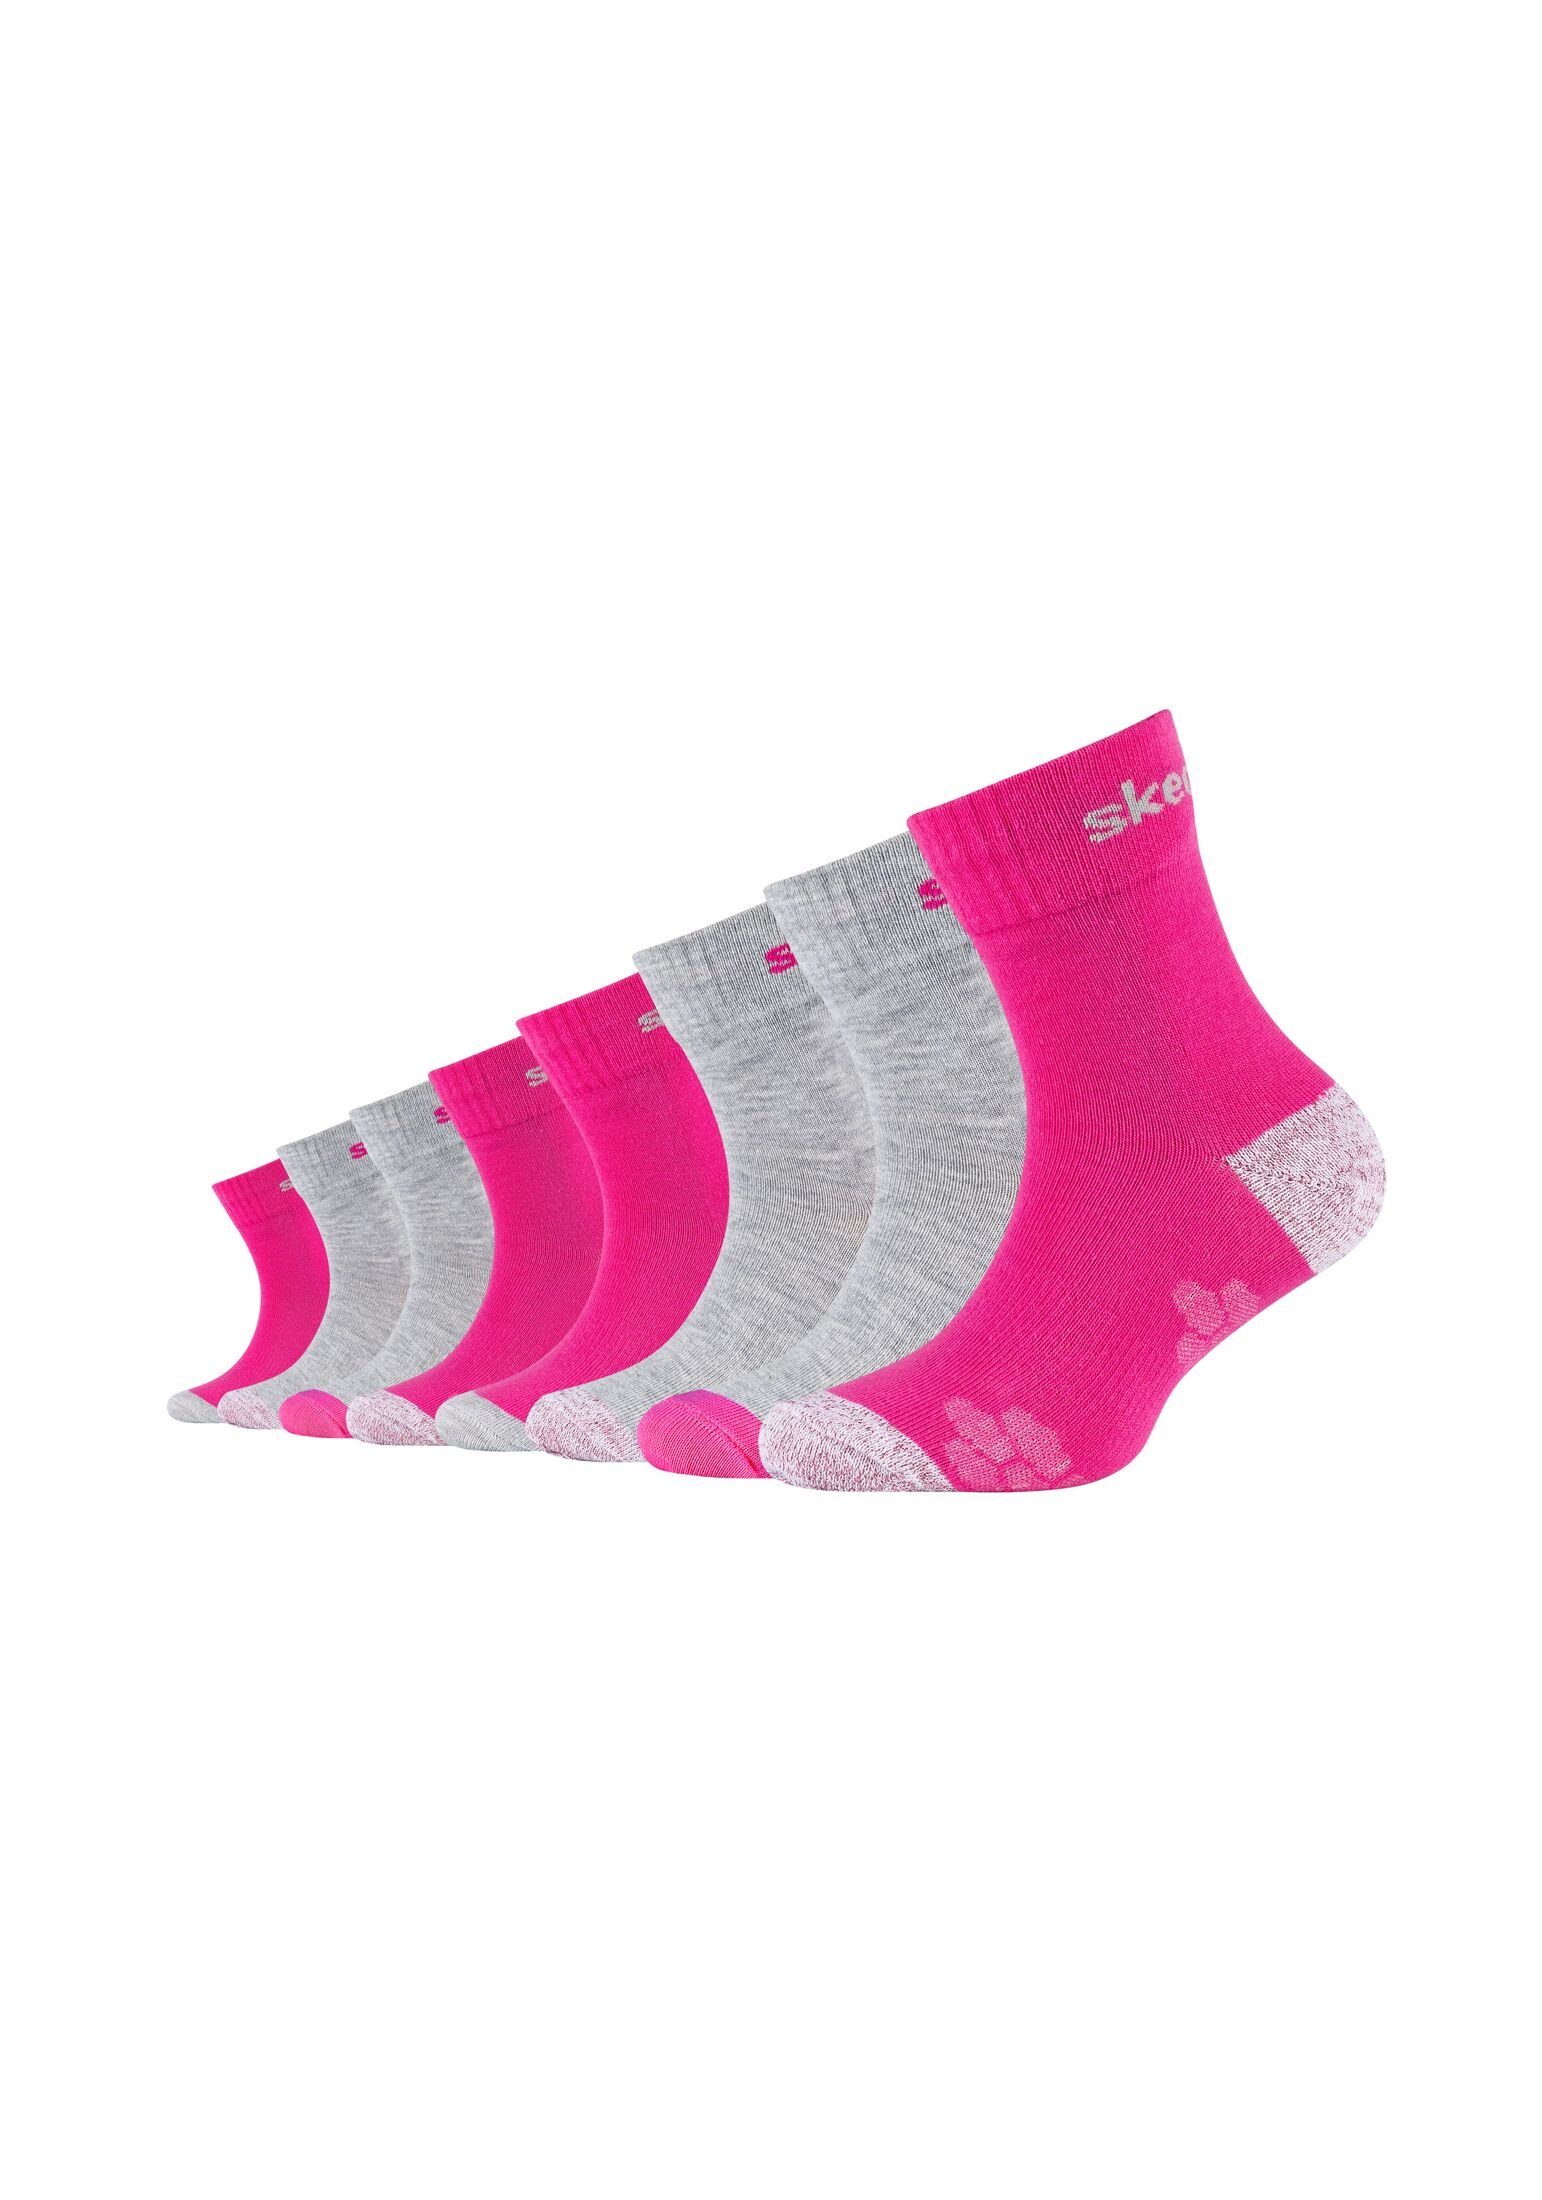 Pack Skechers pink shocking 8er Socken Socken mix